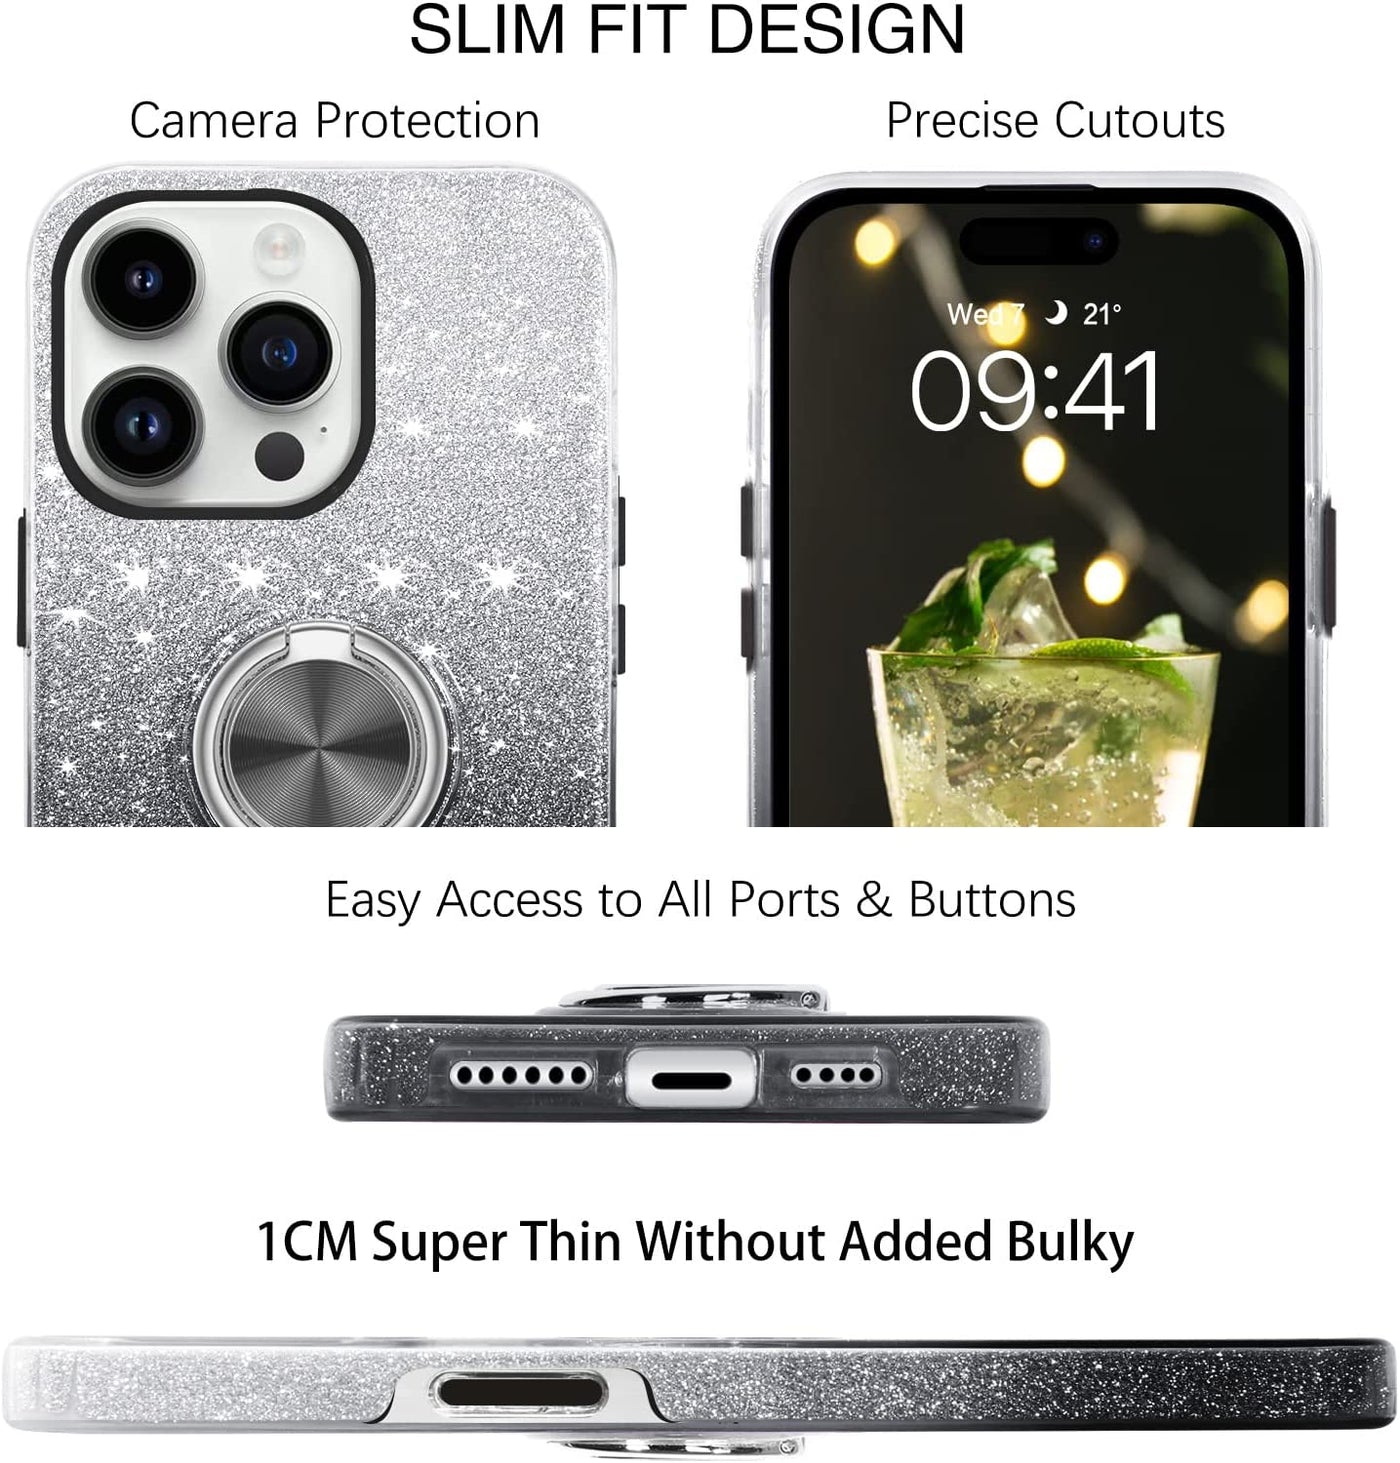 Glitter Shade - iPhone 13 Pro Case